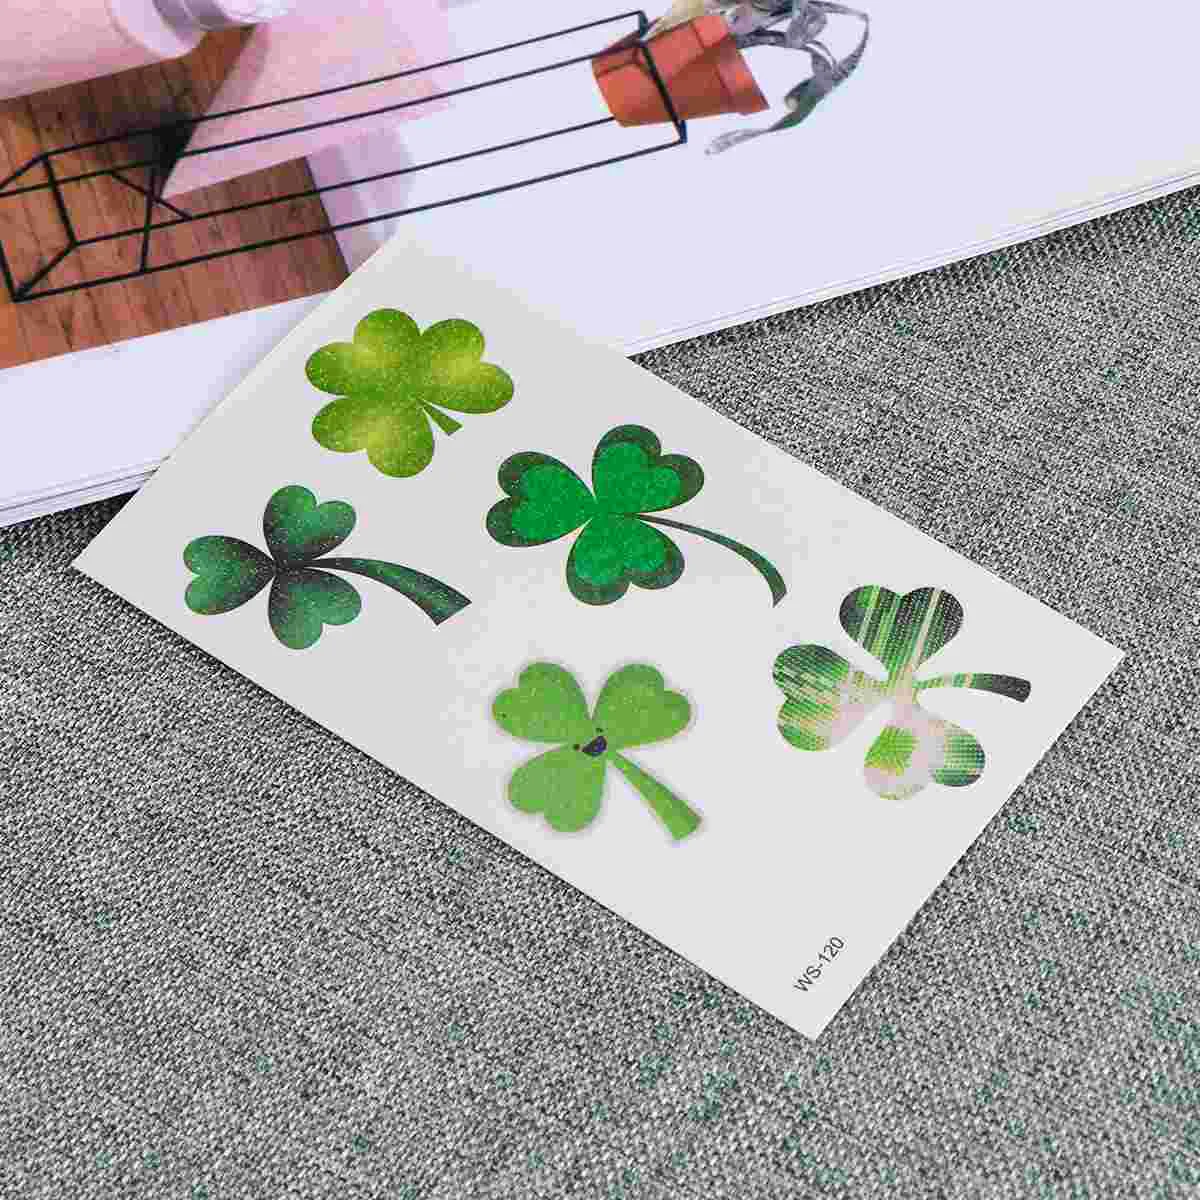 

Shamrock Tattoos Four Leaf Clover Temporary Tattoos St Patricks Day Irish Clover Shamrock Party Favors Decor Accessories